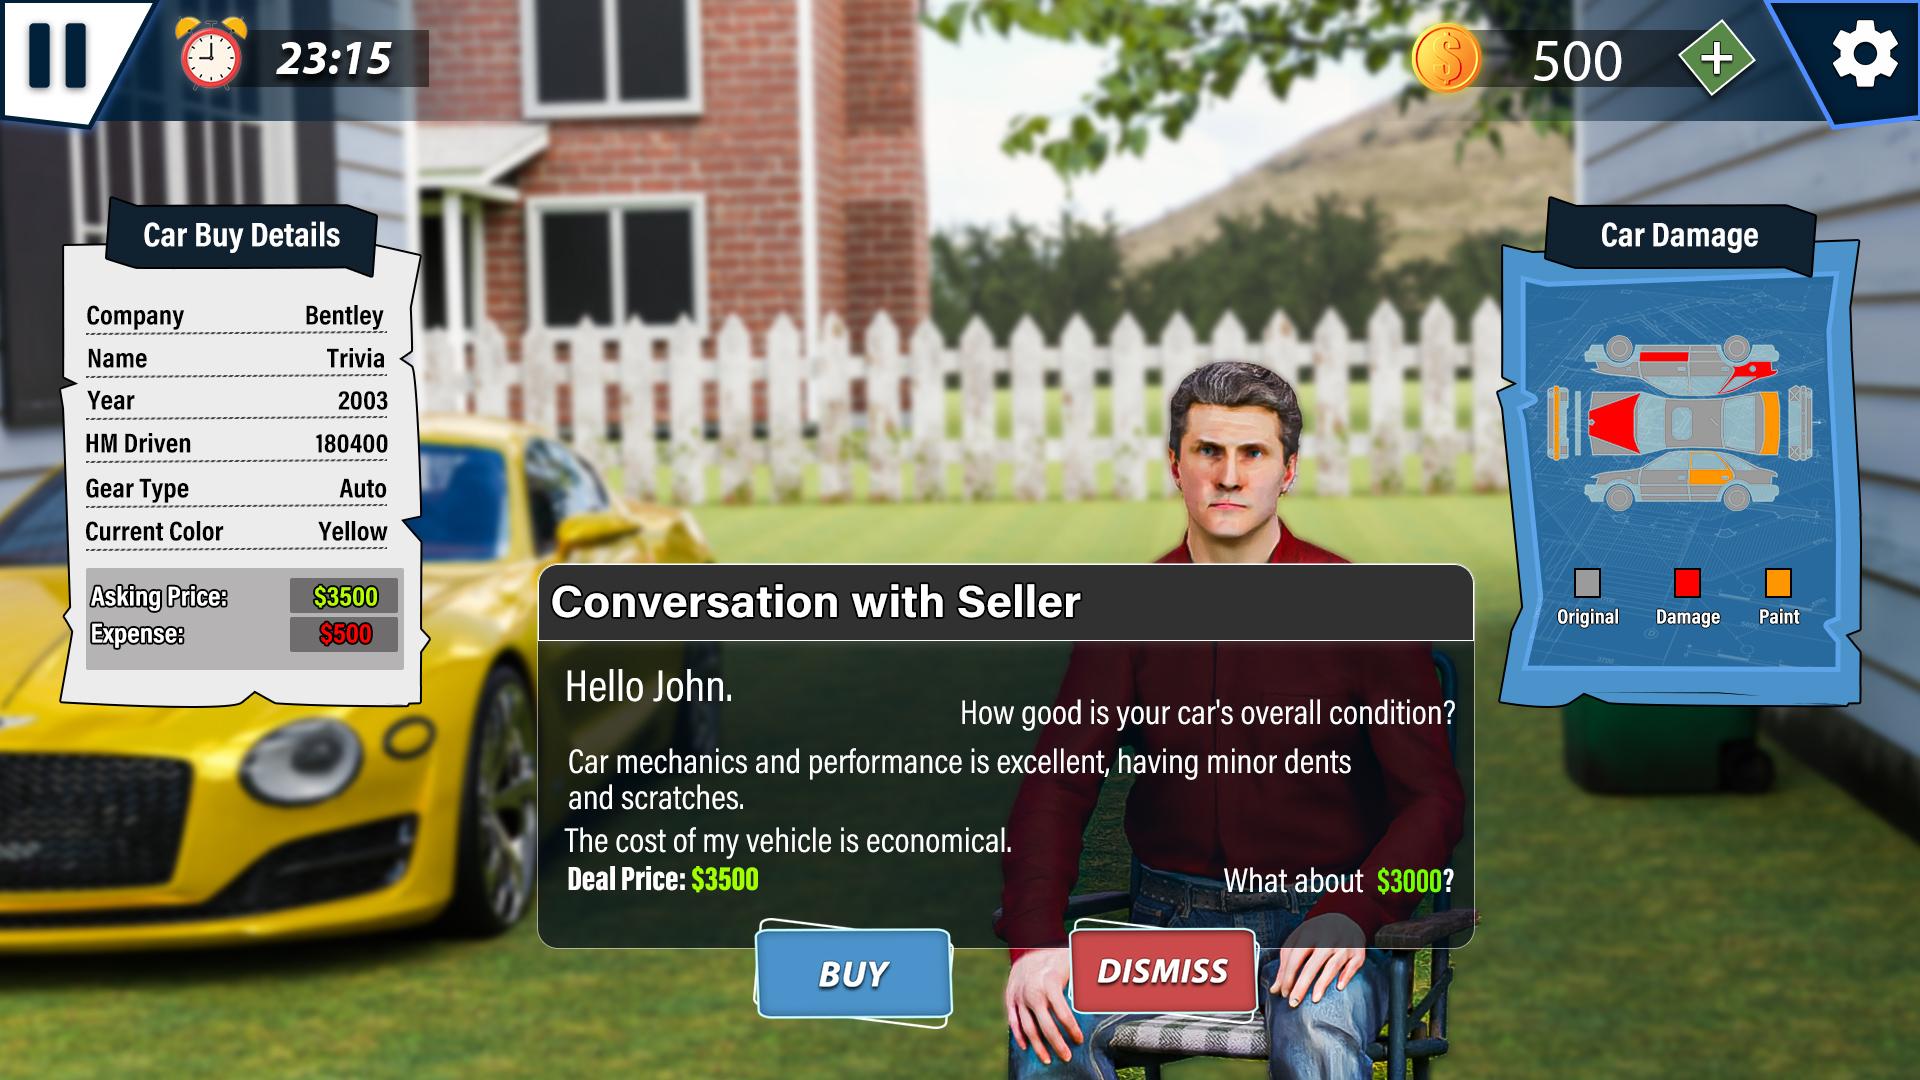 Download Car Saler Simulator 2023 on PC (Emulator) - LDPlayer